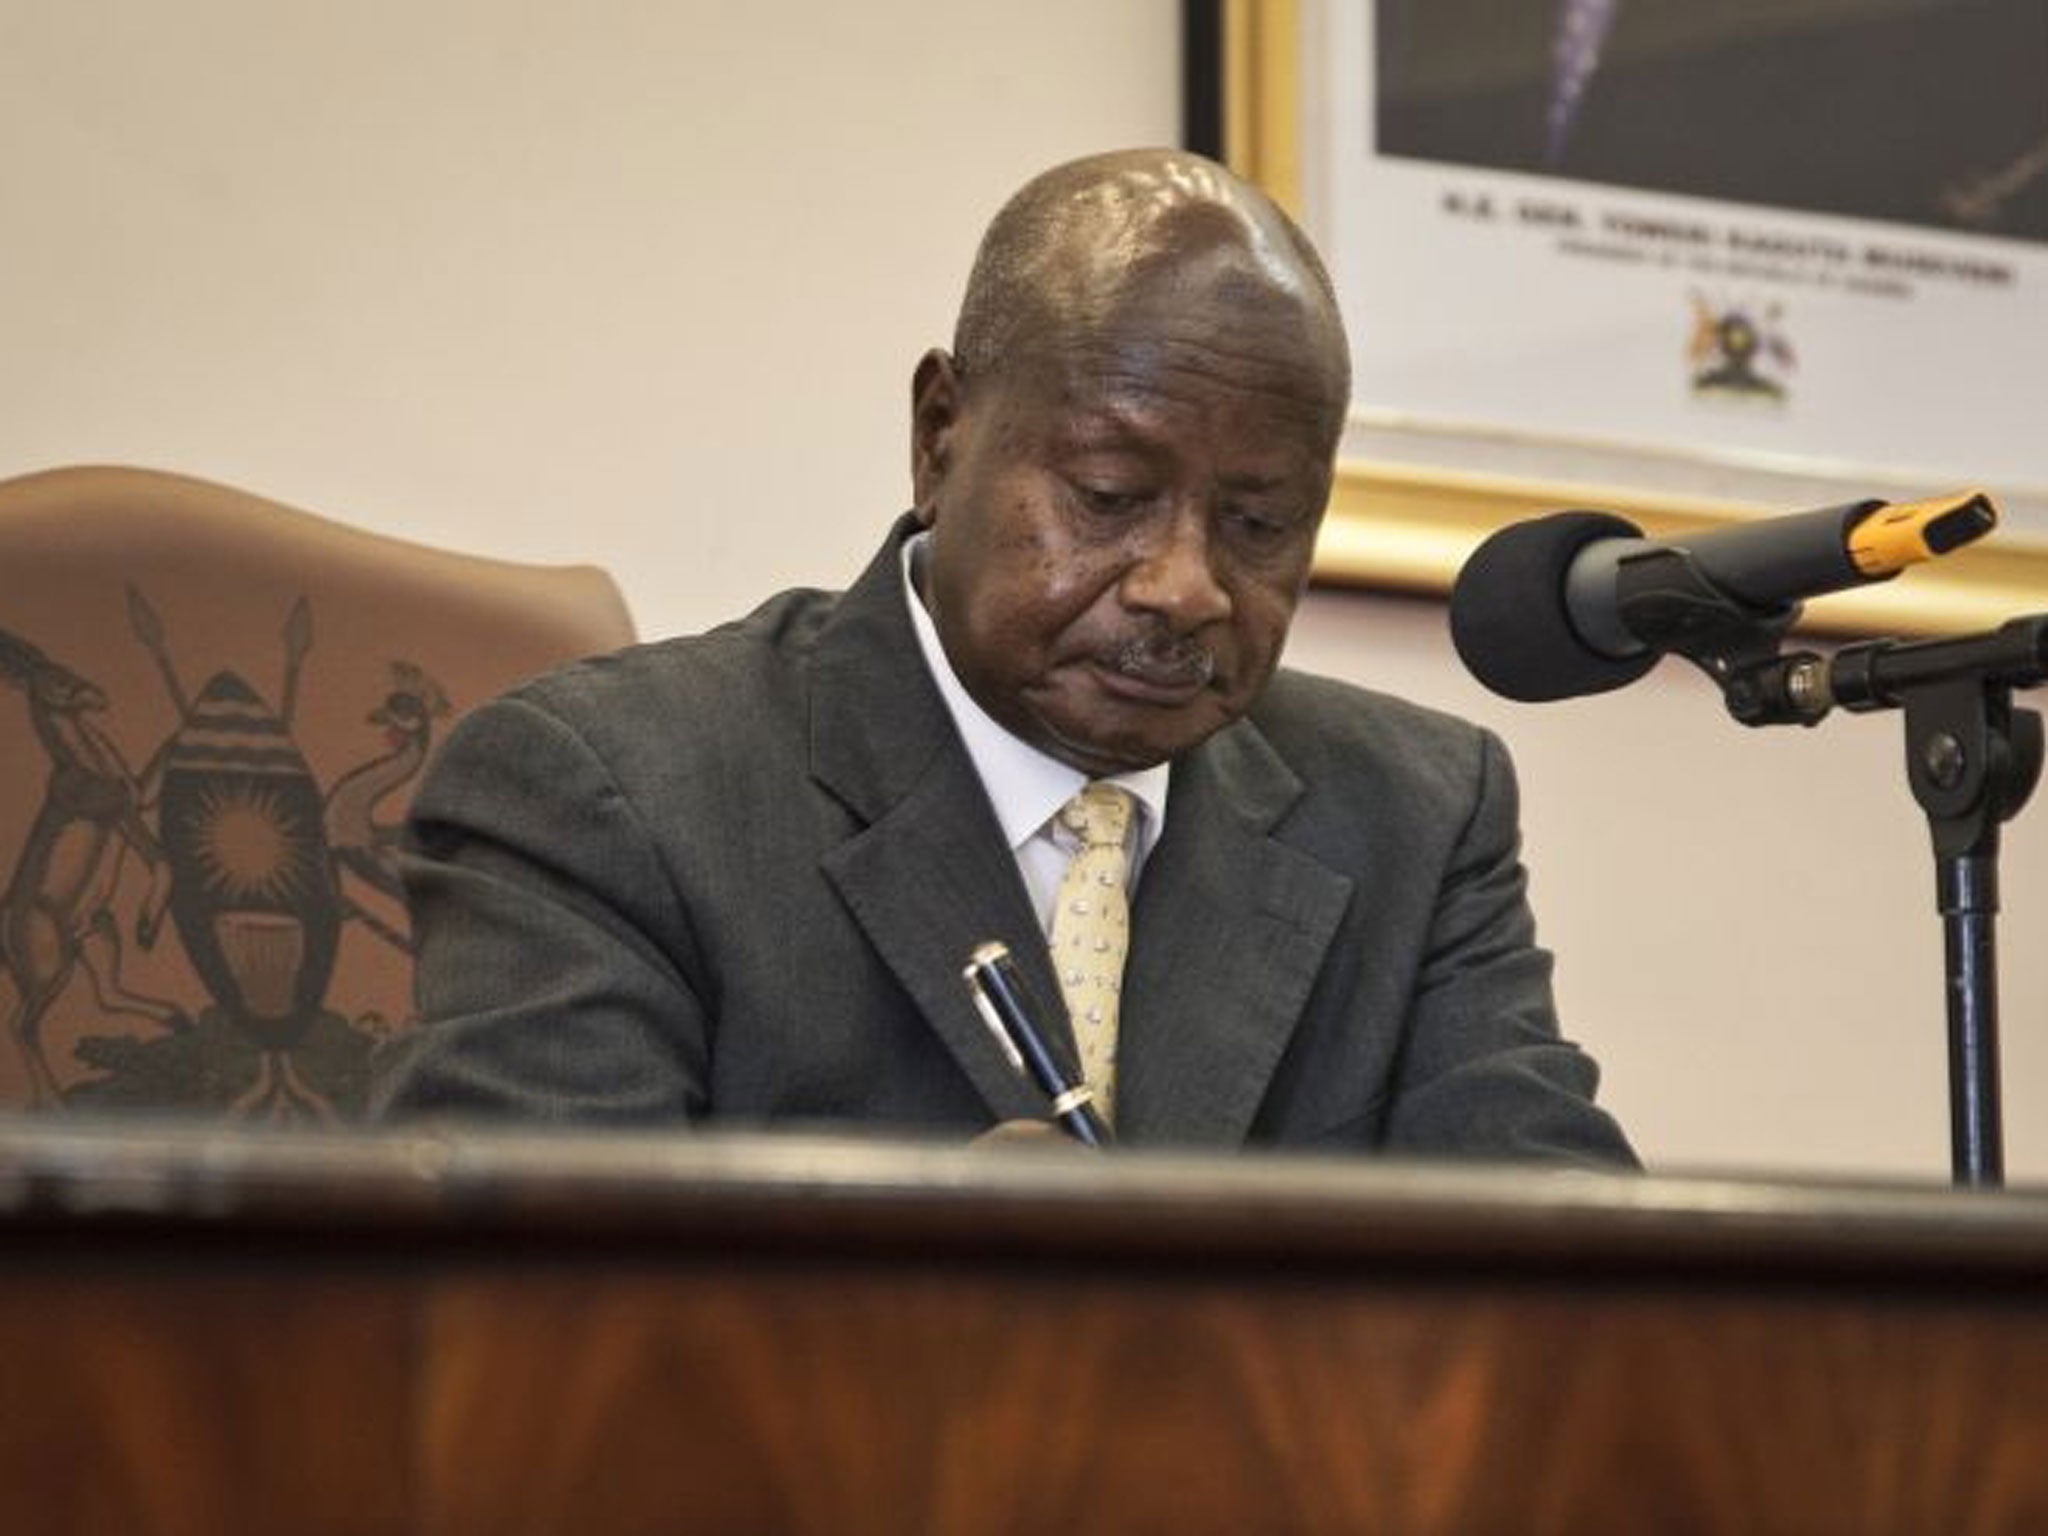 Uganda's President Yoweri Museveni signs a new anti-gay bill that sets harsh penalties for homosexual sex, in Entebbe, Uganda.